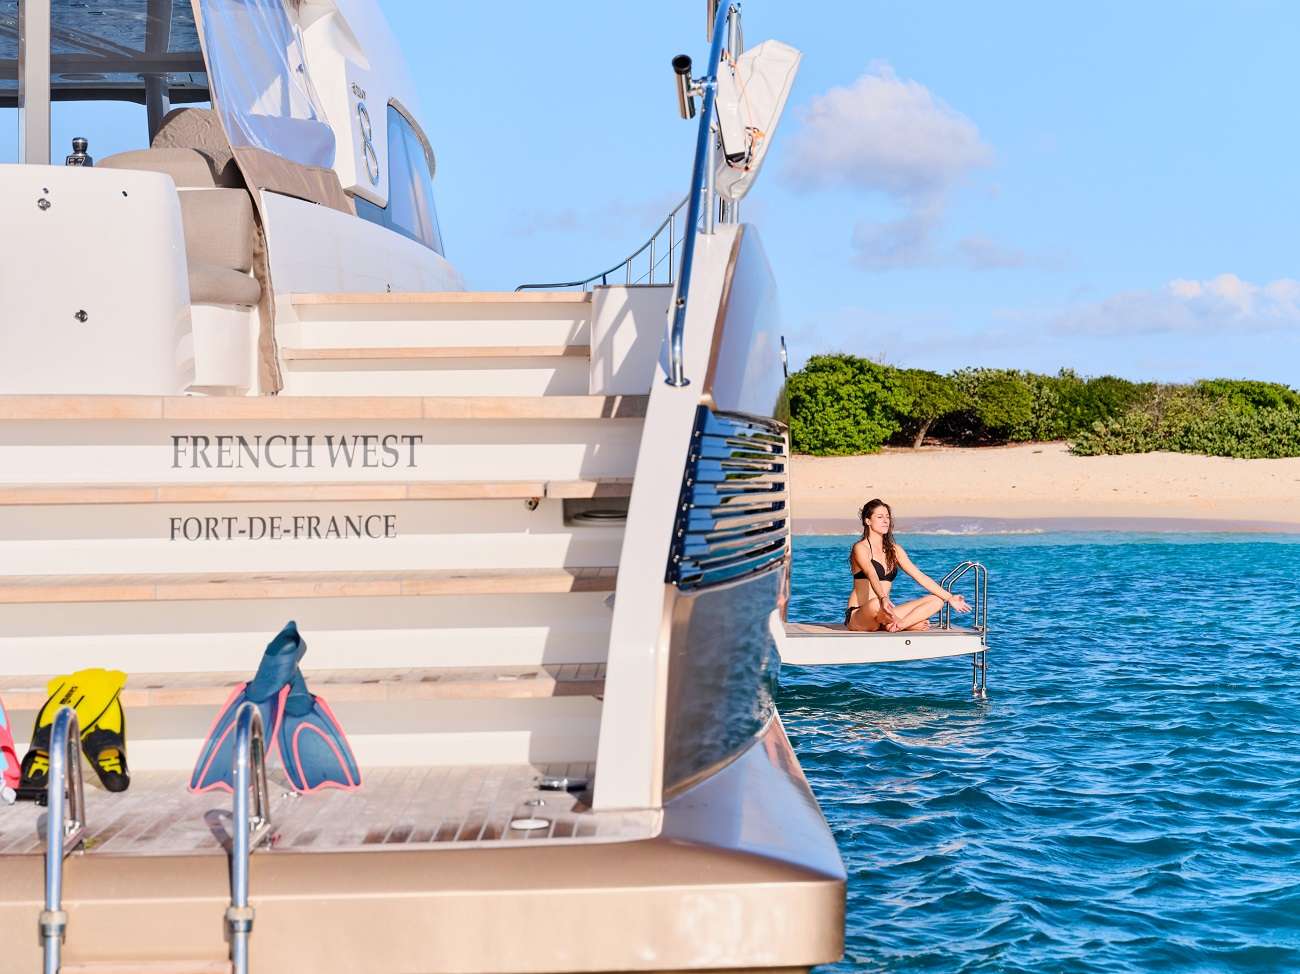 FRENCHWEST Yacht Charter - FW leisure platform - N. Claris pic